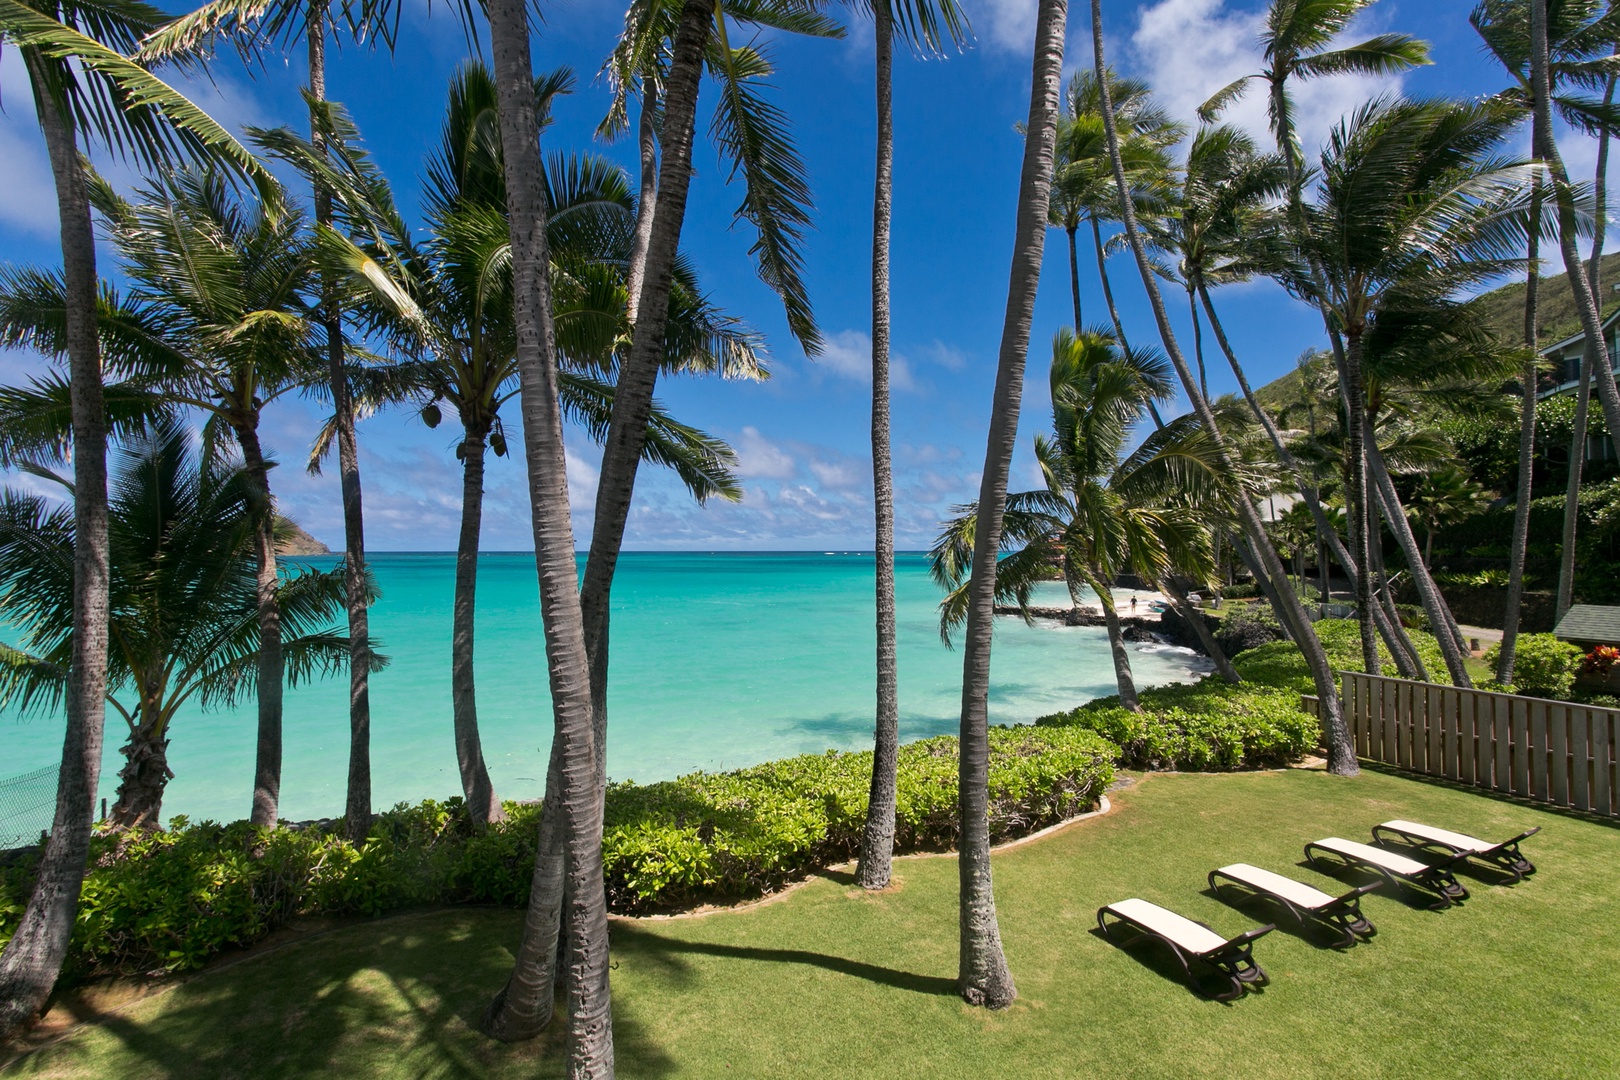 Kailua Vacation Rentals, Lanikai Village* - Scenic ocean views from the deck of Hale Melia.